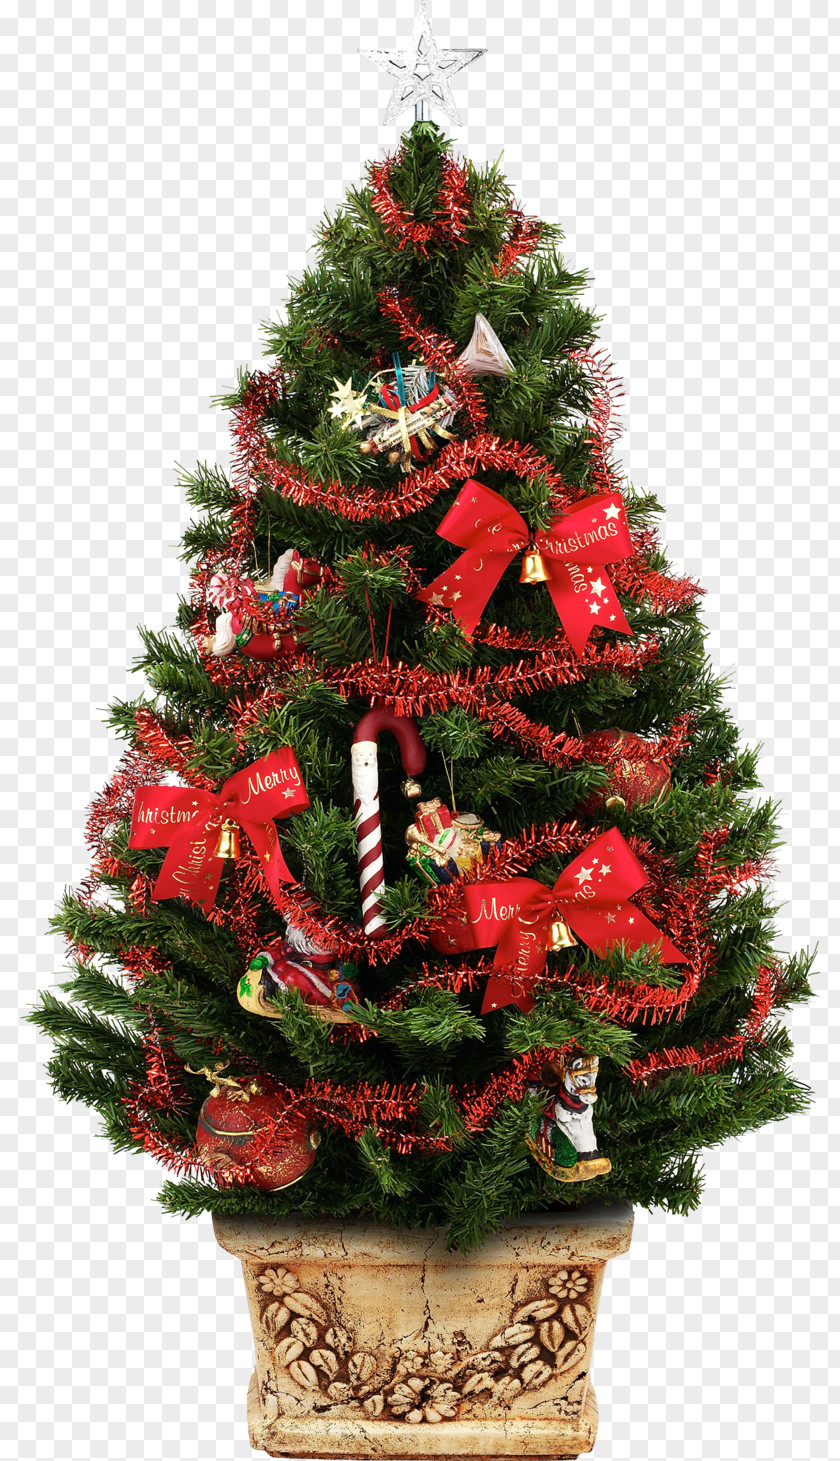 Lustre Christmas Tree Santa Claus Decoration Ornament PNG